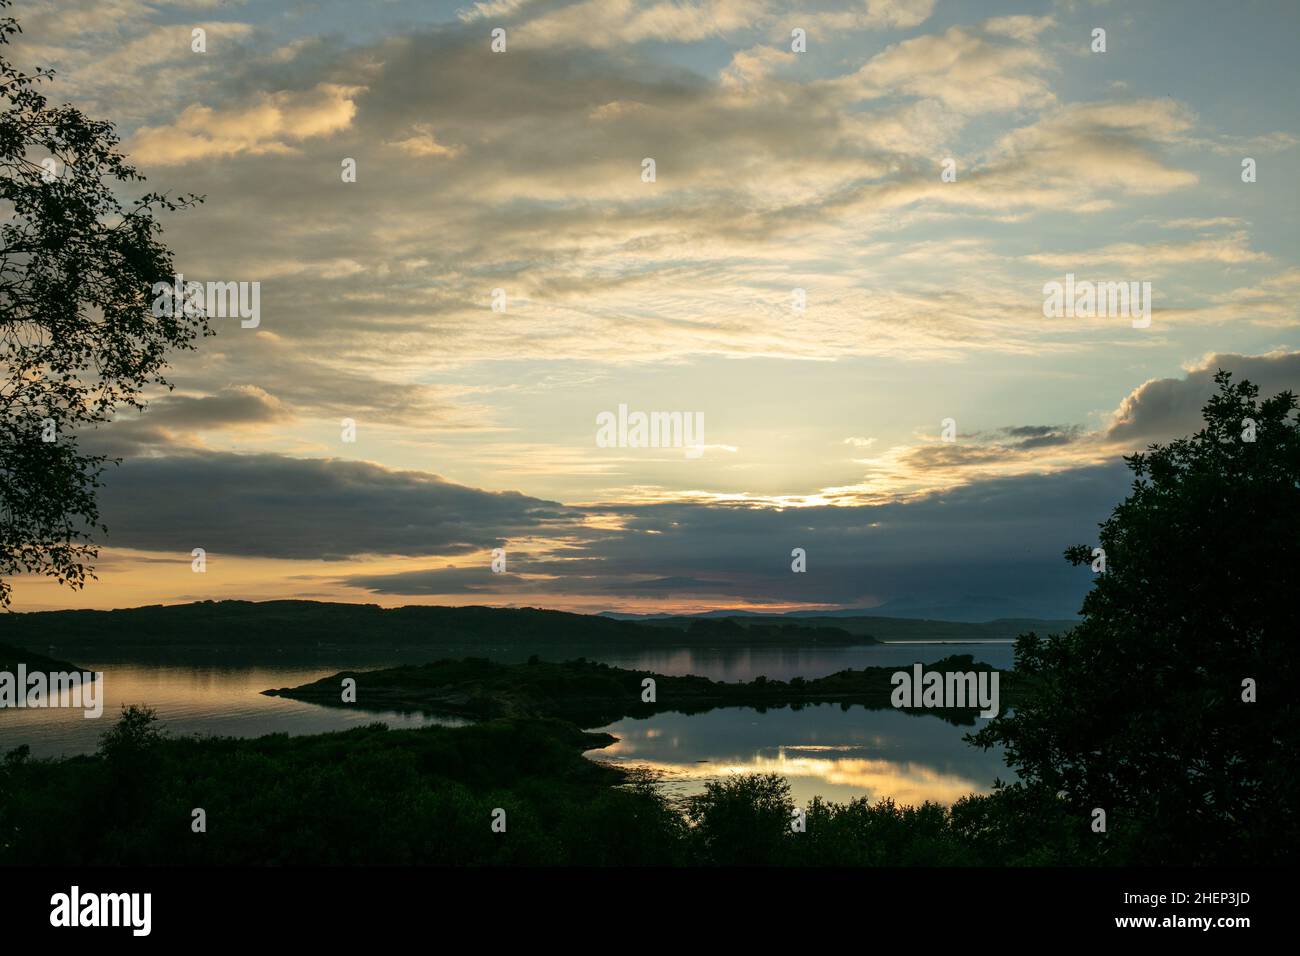 Cloudy sunset over the Loch Shuna in Scotland. Sunset over Loch Shuna in Craobh Haven, Argyll and Bute in Scotland. Stock Photo